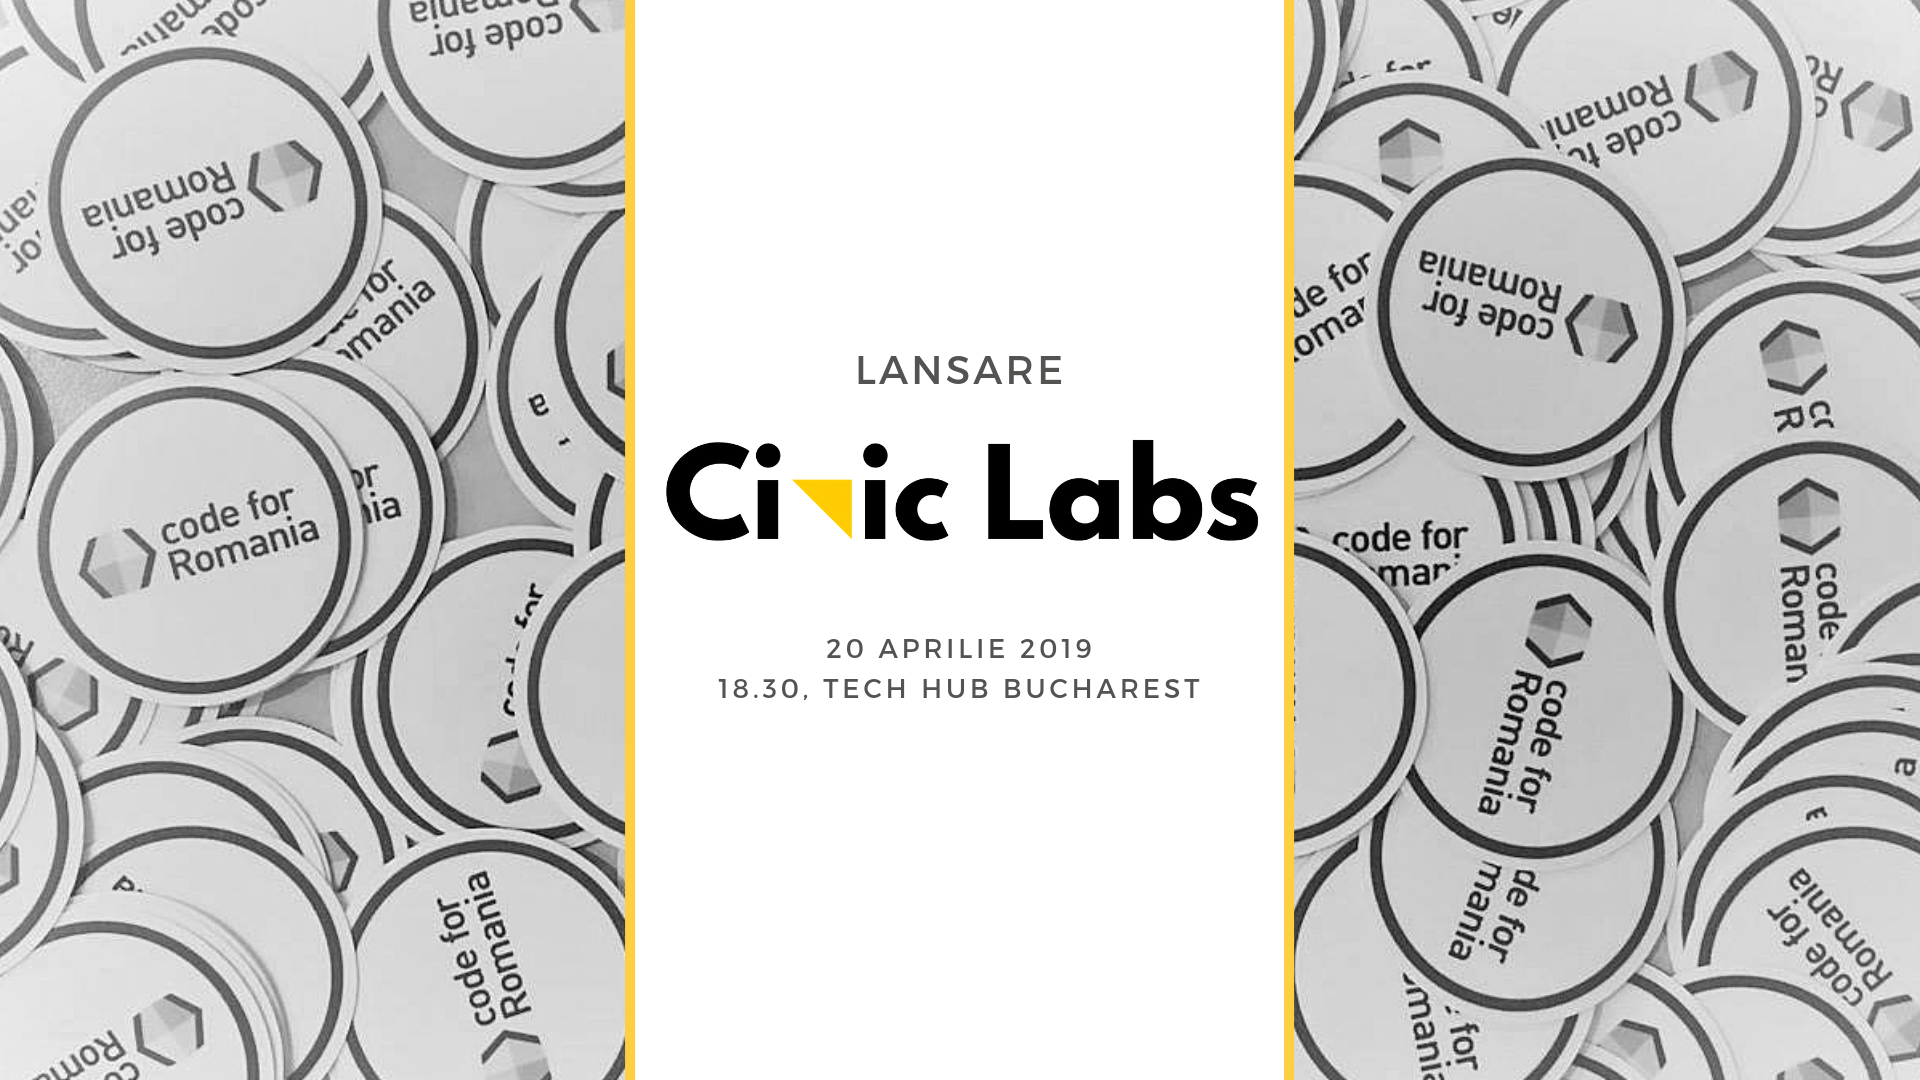 Lansare Civic Labs